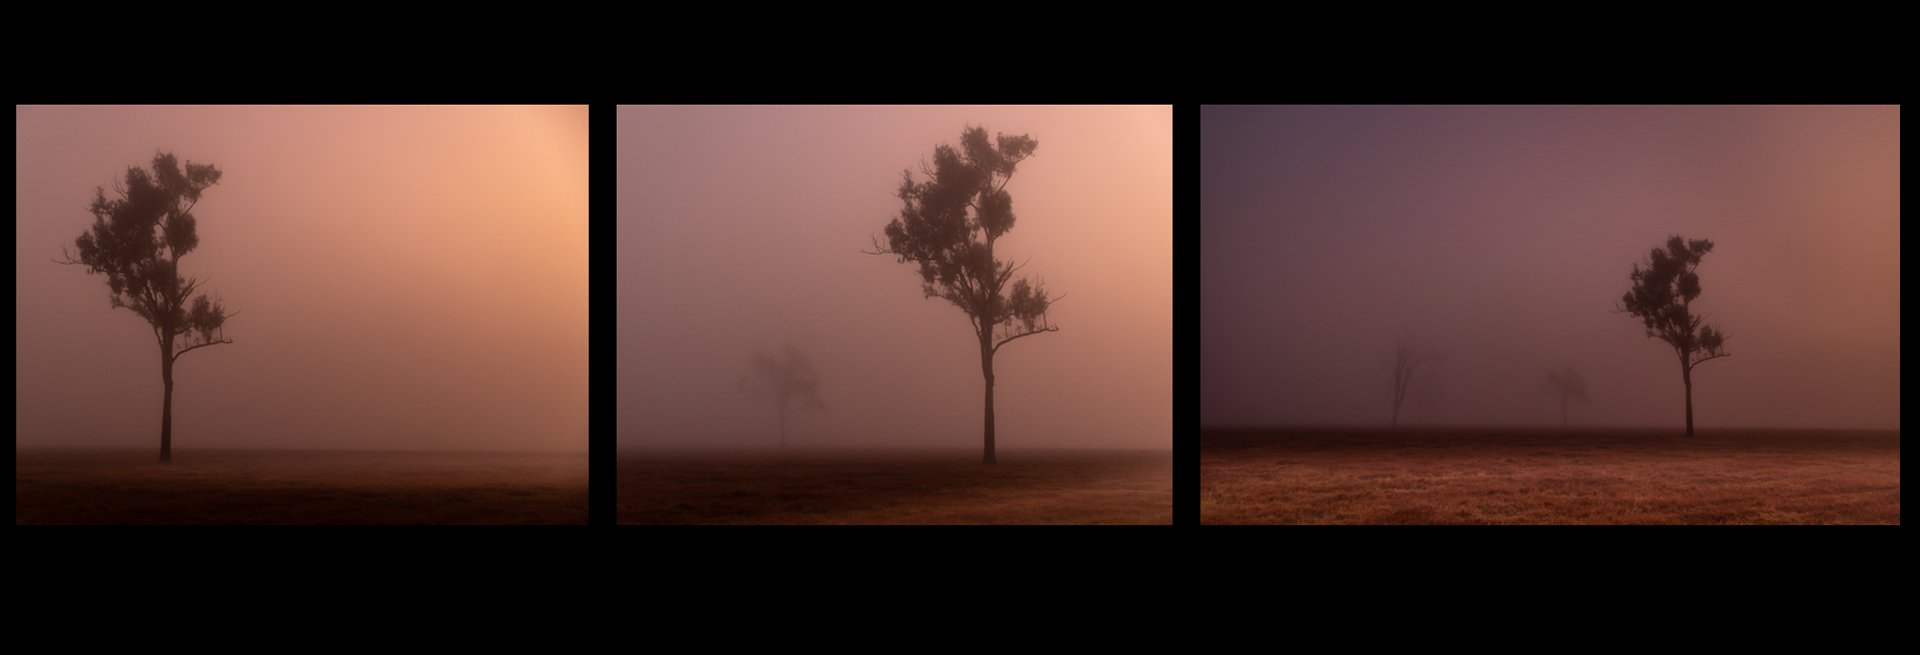 Heleen Daniels - Fog Lit Morning_Solo Tree_Two Trees_Three Trees - MERIT